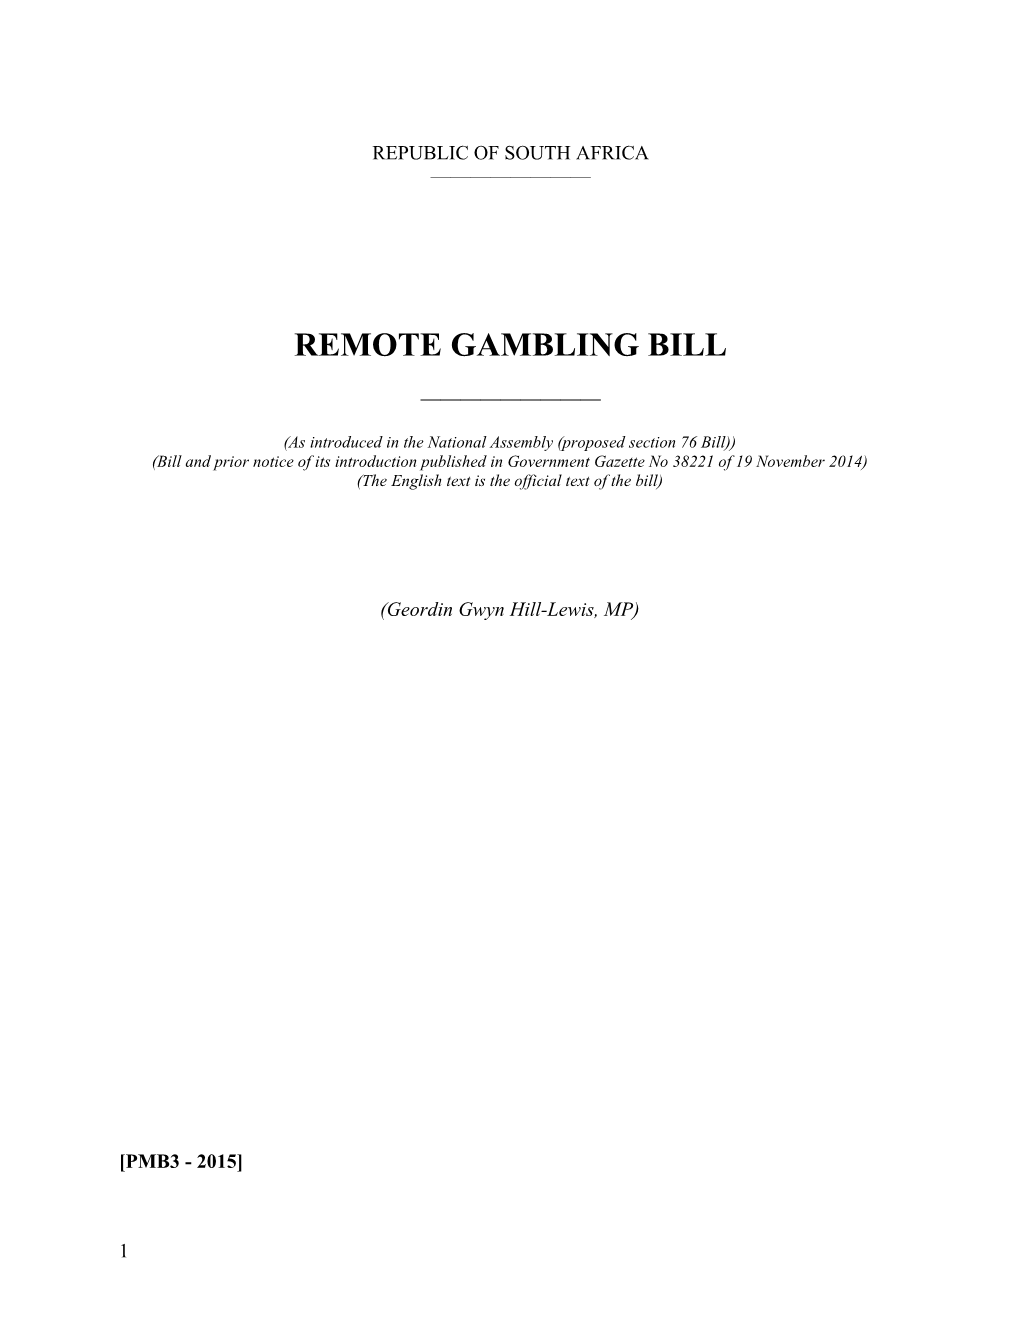 Remote Gambling Bill